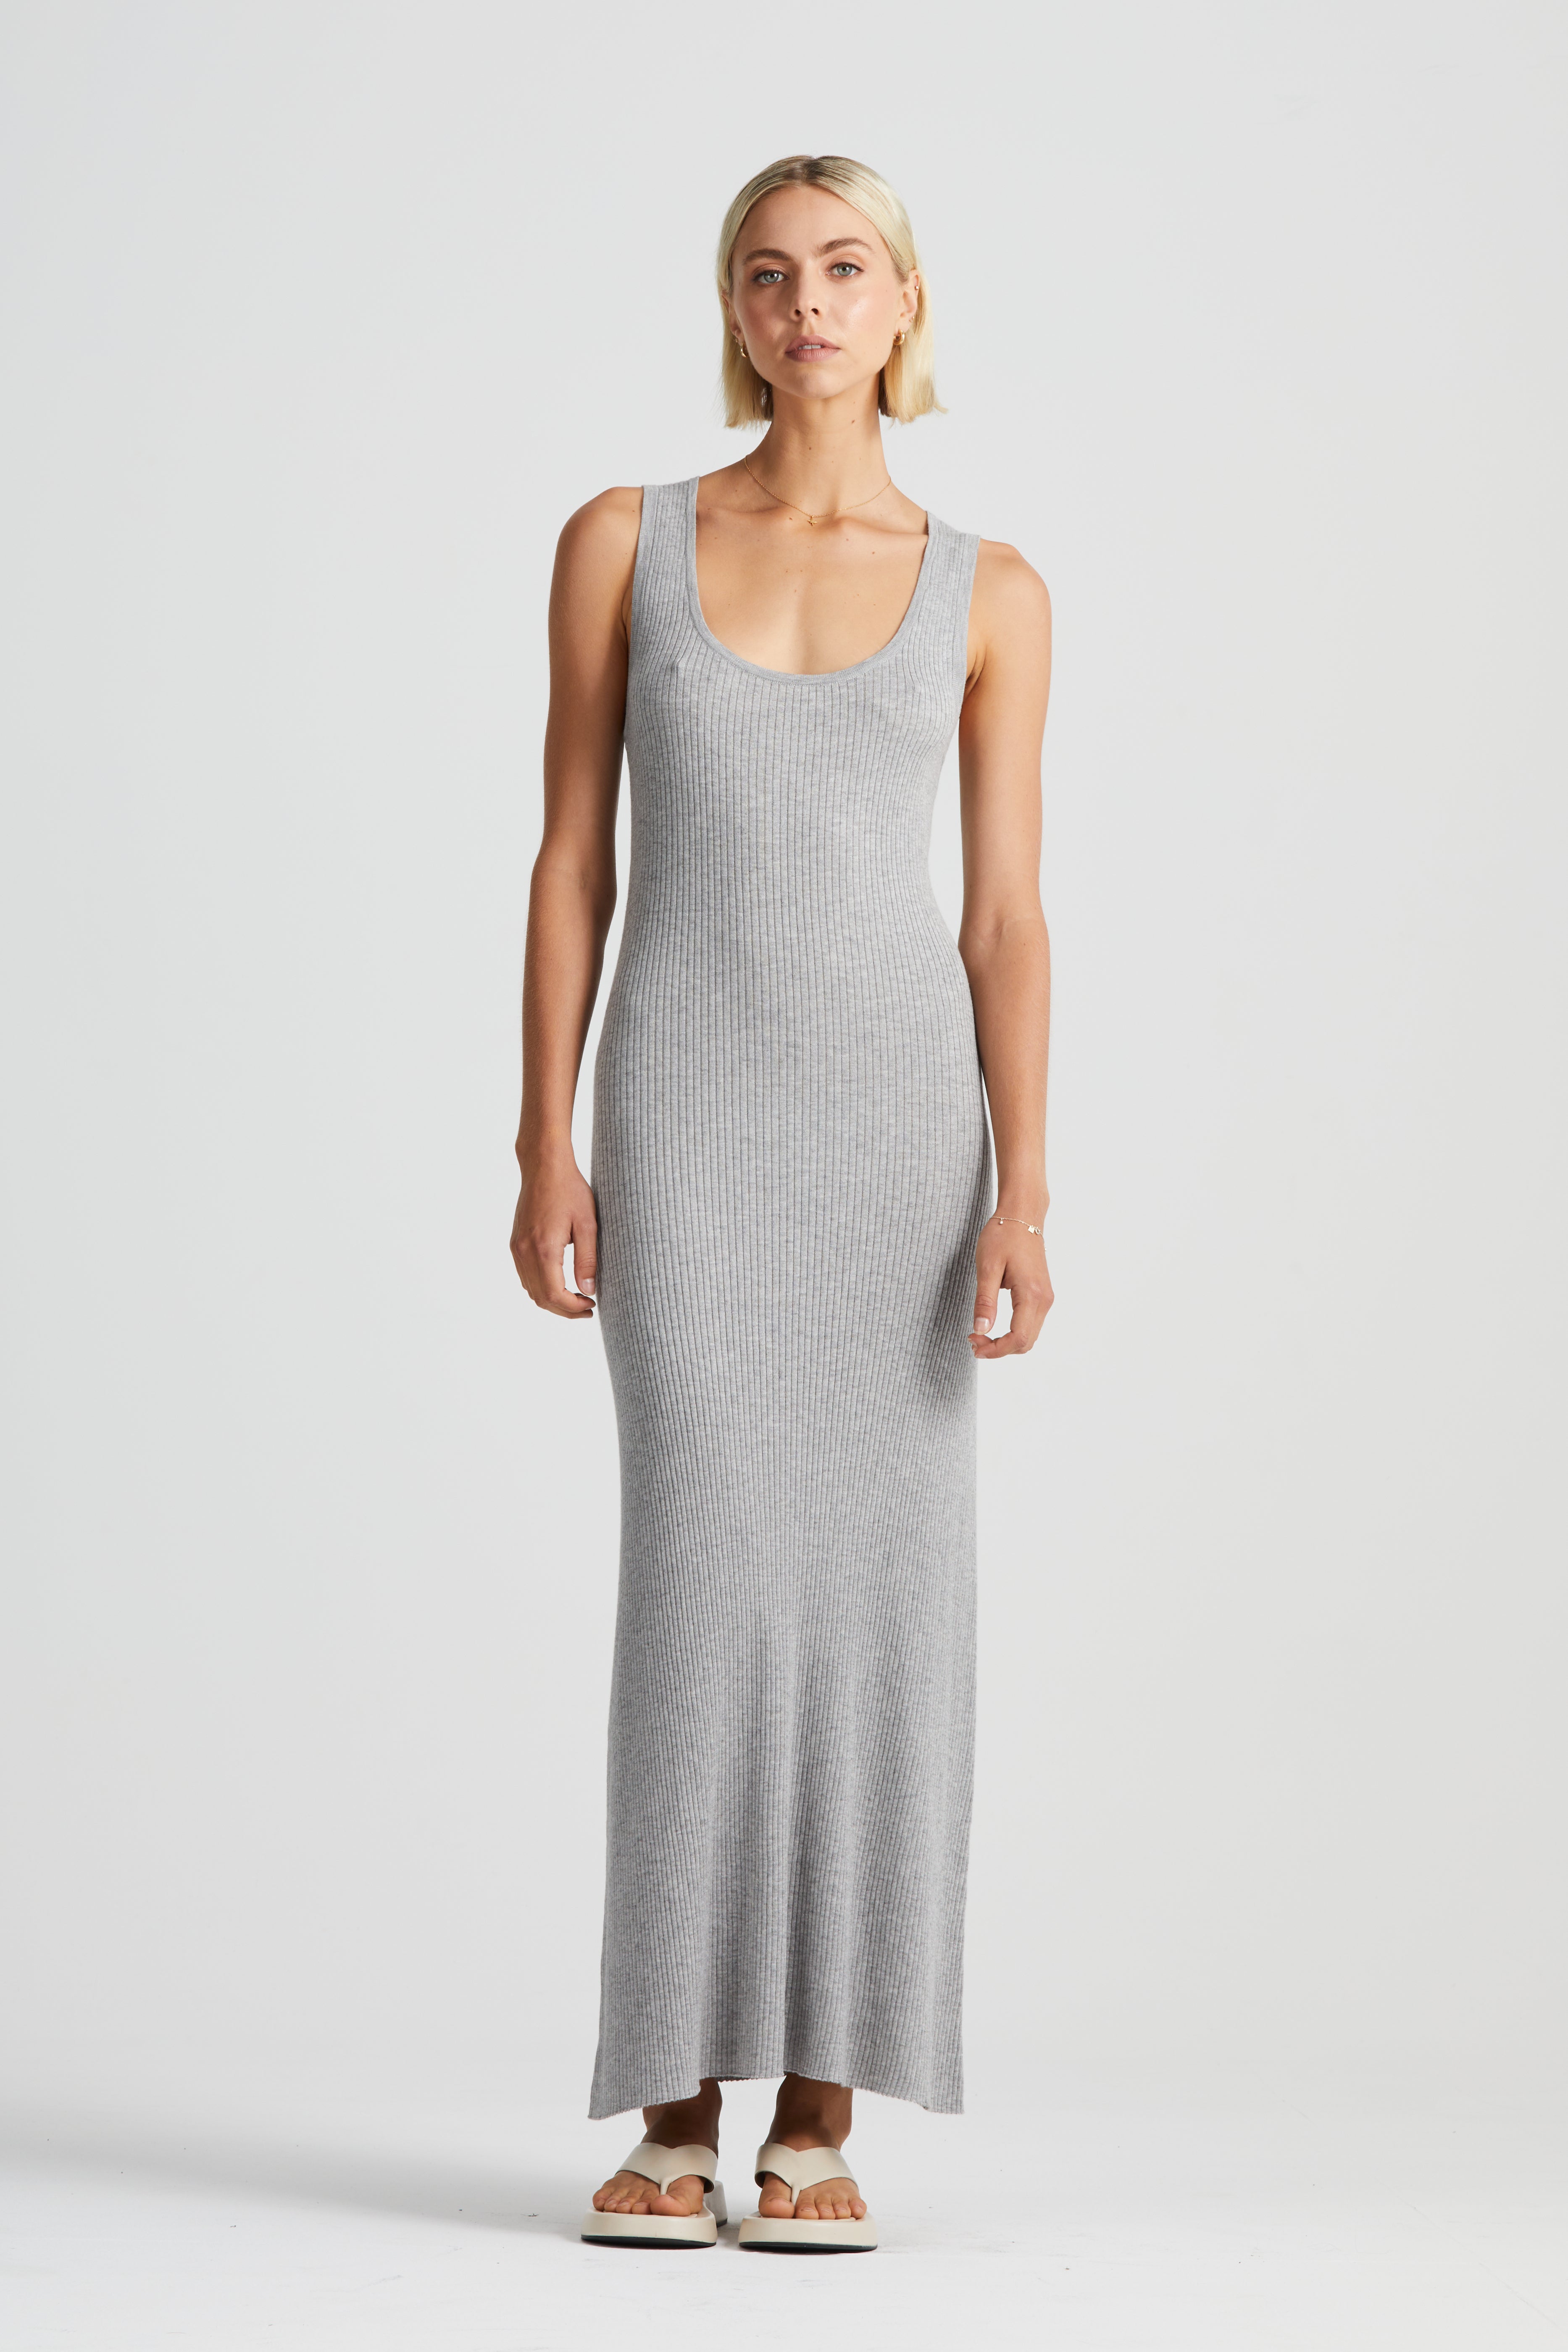 The Linear Sleeveless Knit Dress | Grey Marle $390